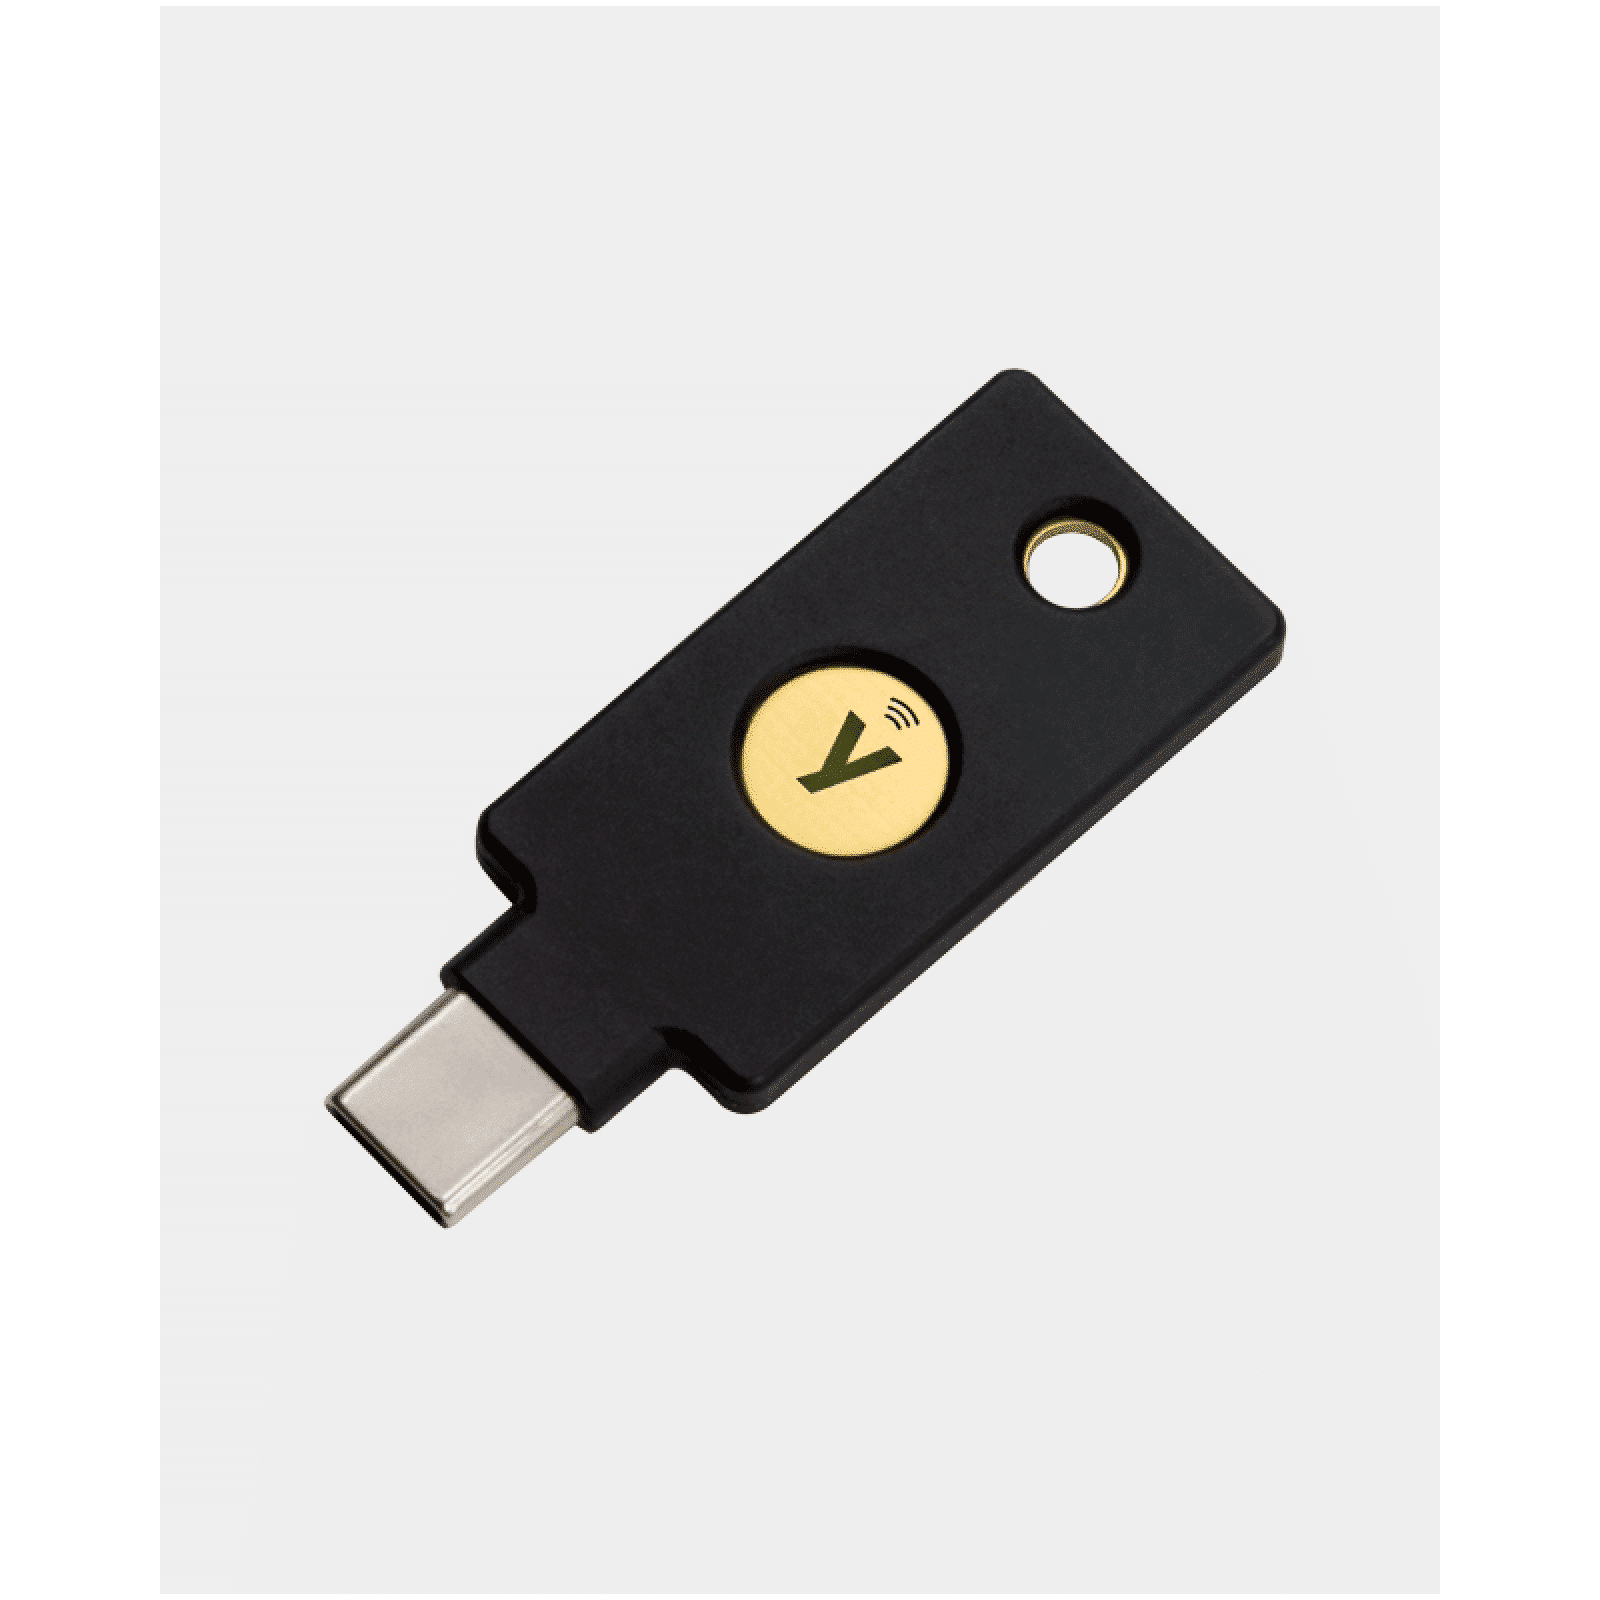 Аппаратный ключ безопасности Yubico YubiKey 5C NFC (YubiKey_5C_NFC)